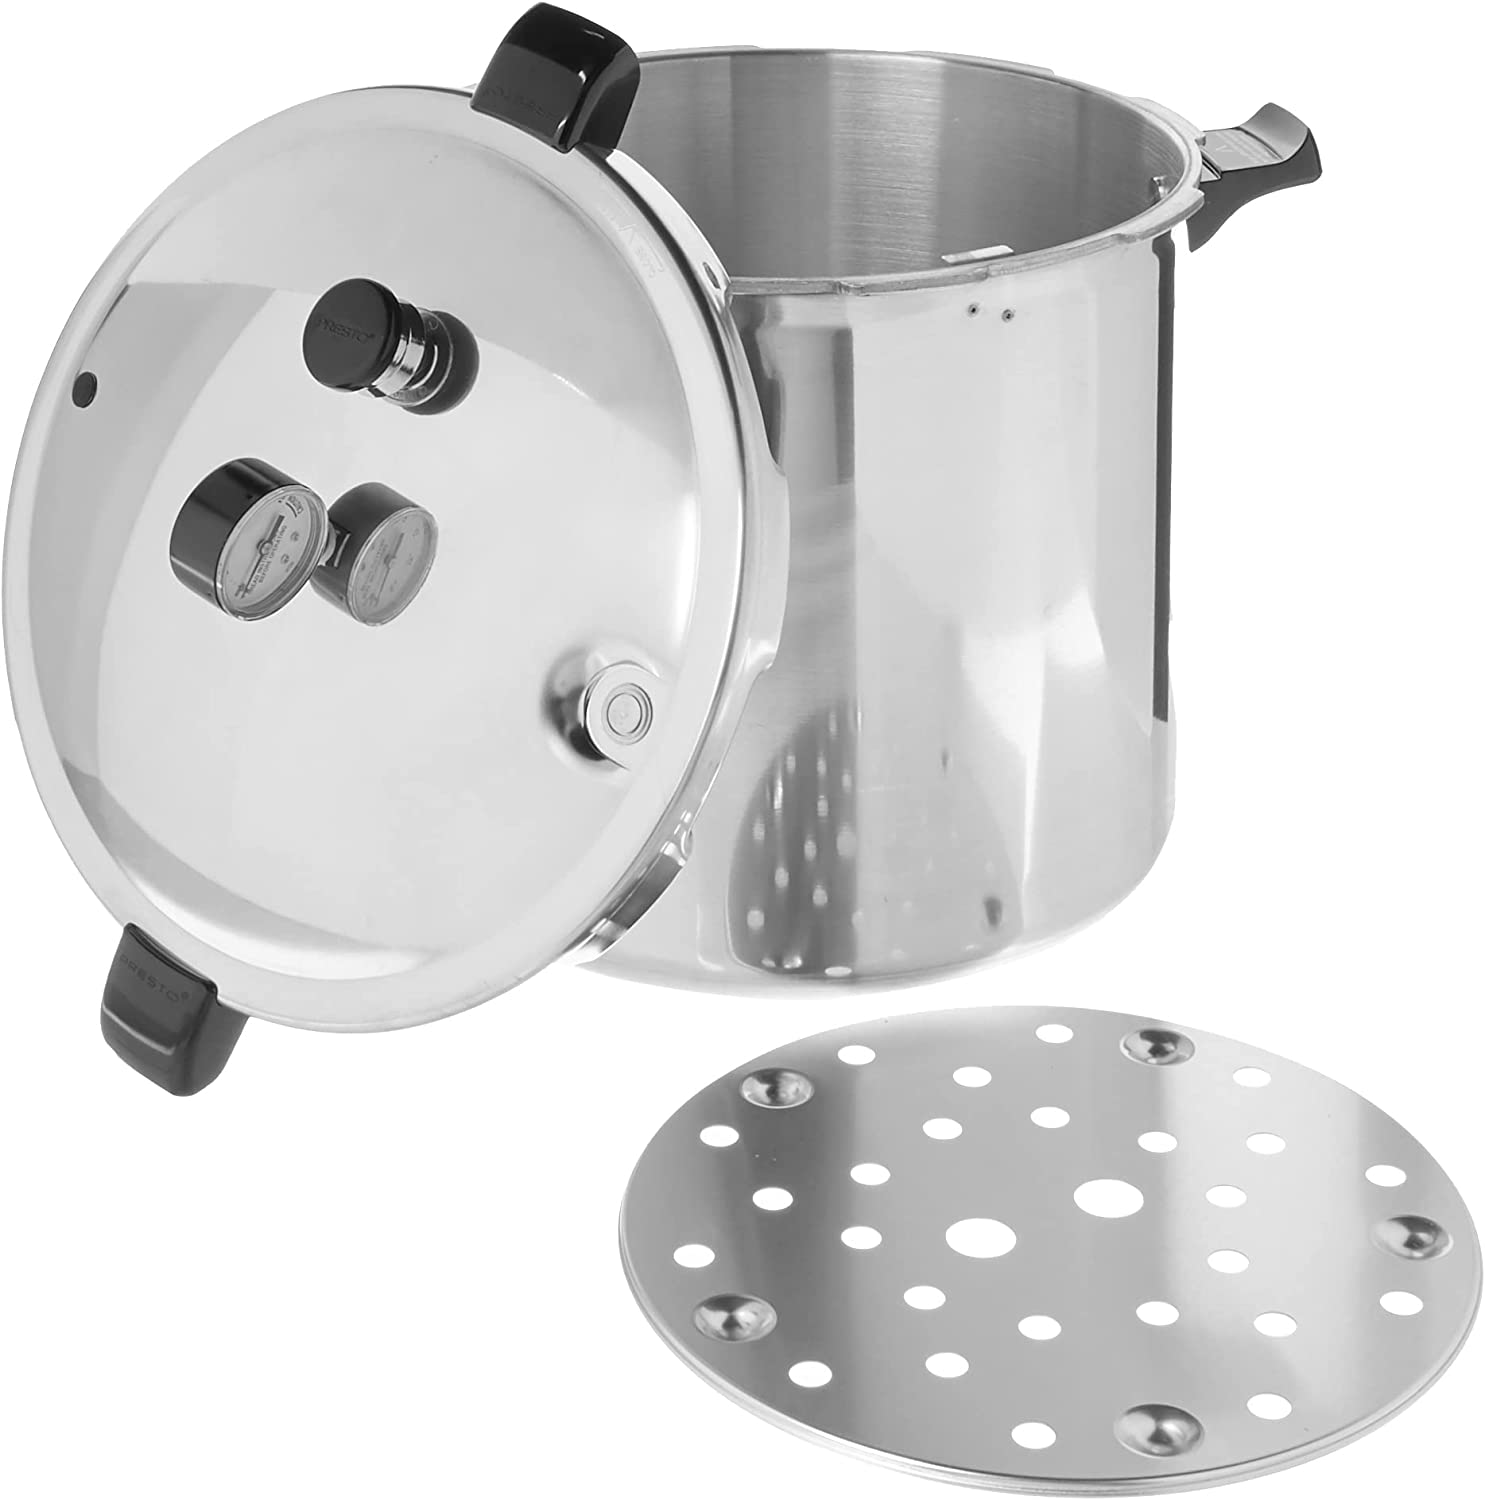 Presto Pro Stainless Steel Pressure Cooker, Silver, 8 qt